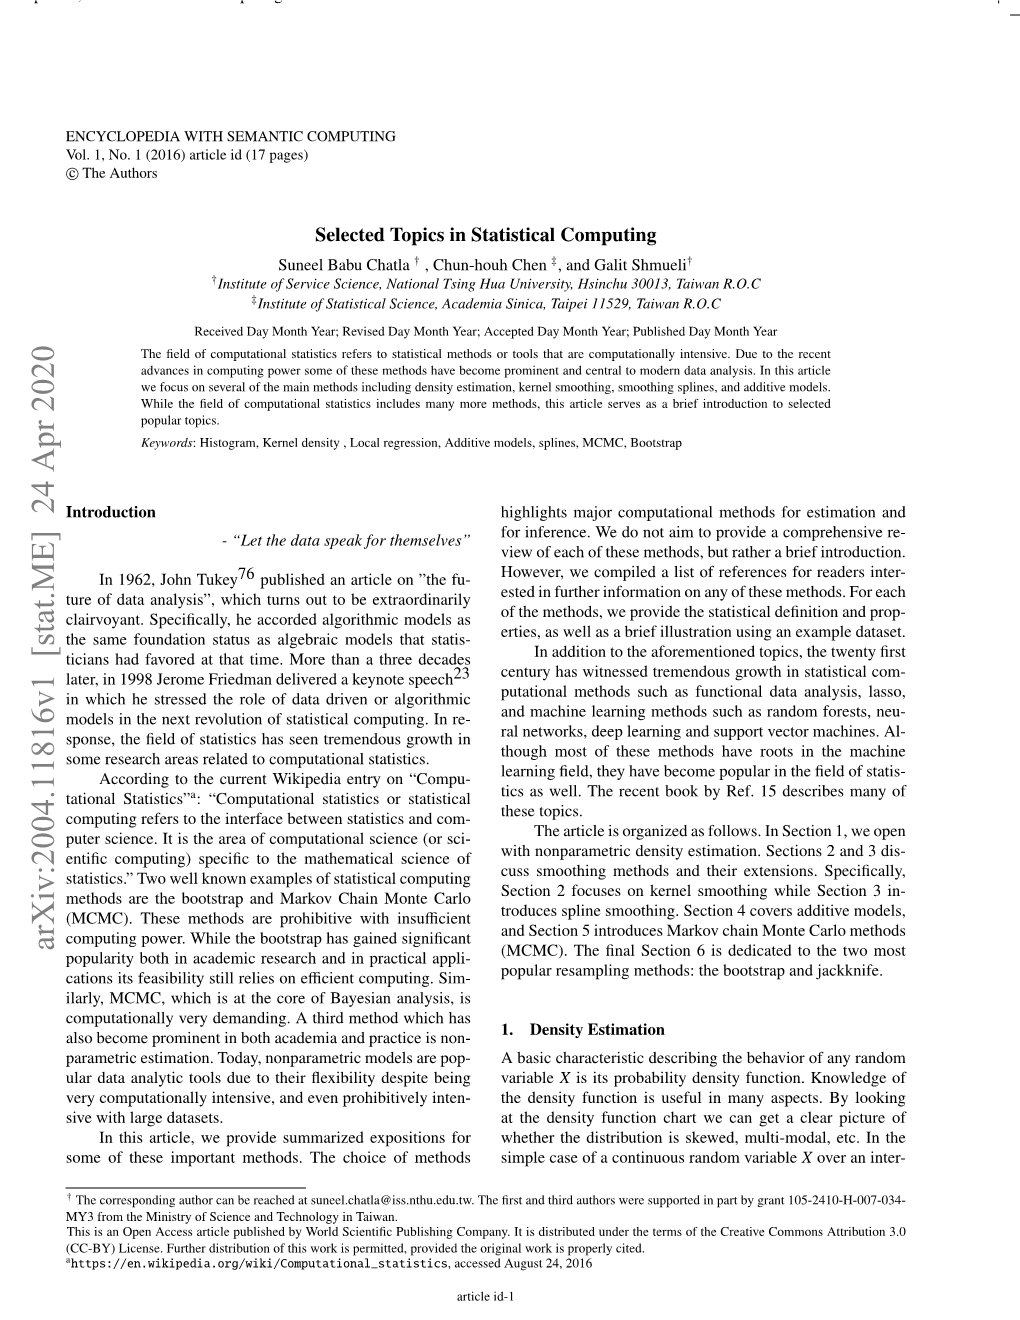 Selected Topics in Statistical Computing